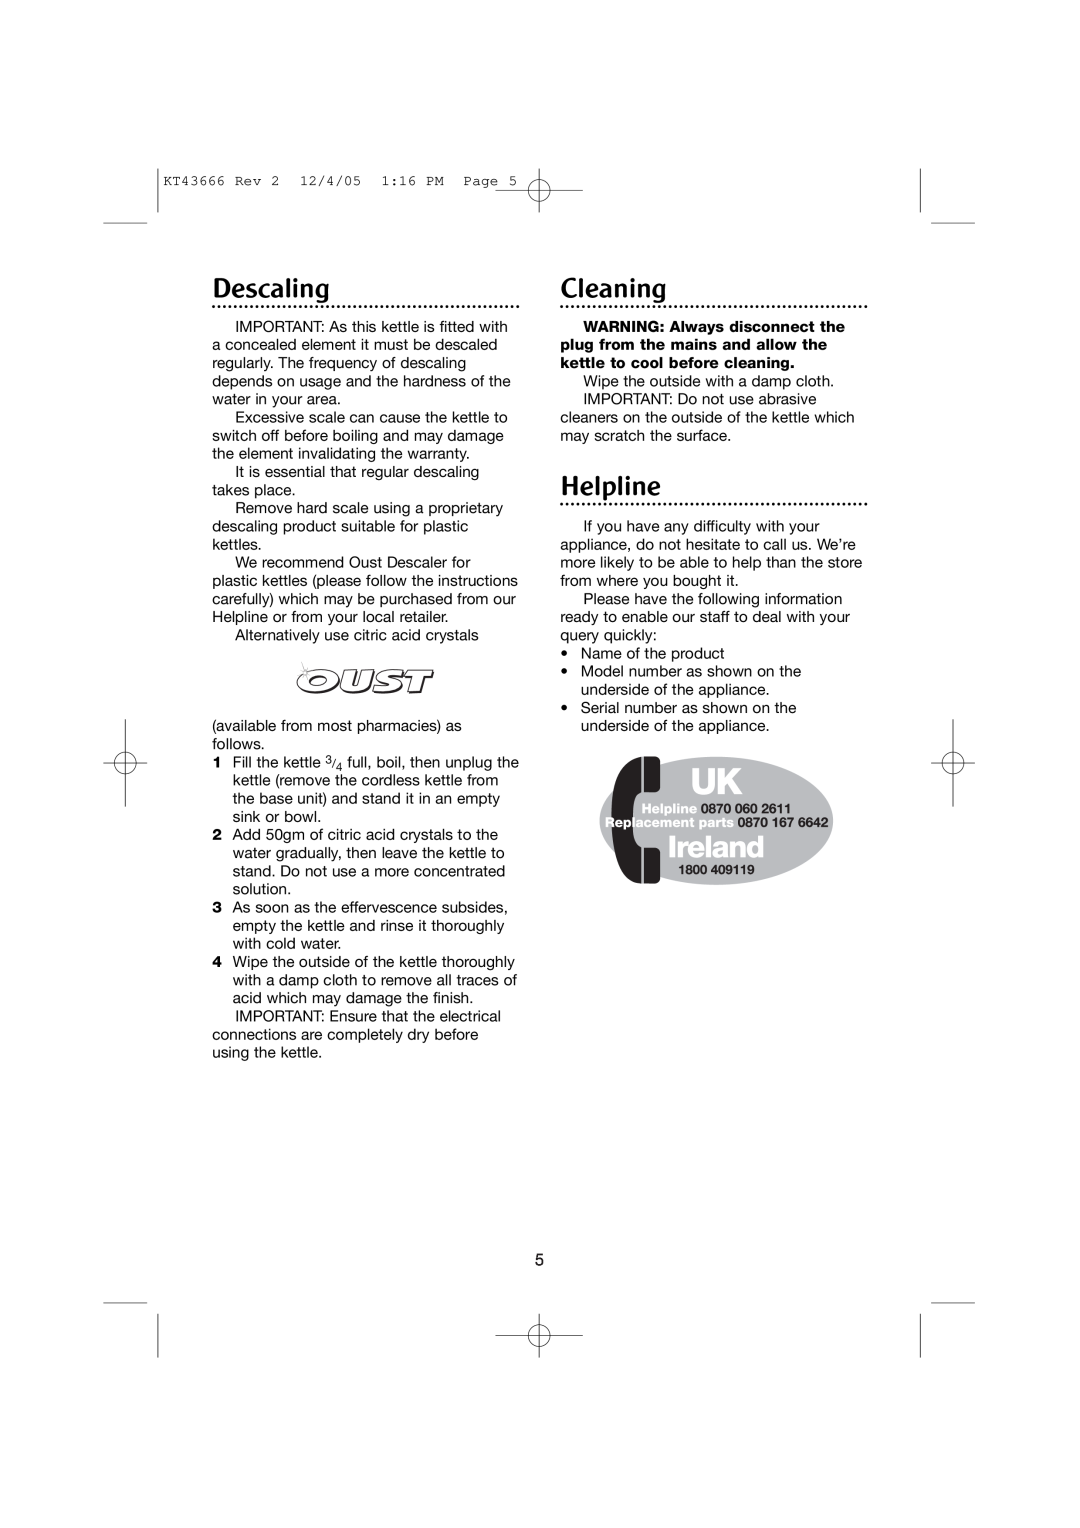 Morphy Richards Opera jug kettle manual Descaling, Cleaning, Helpline 